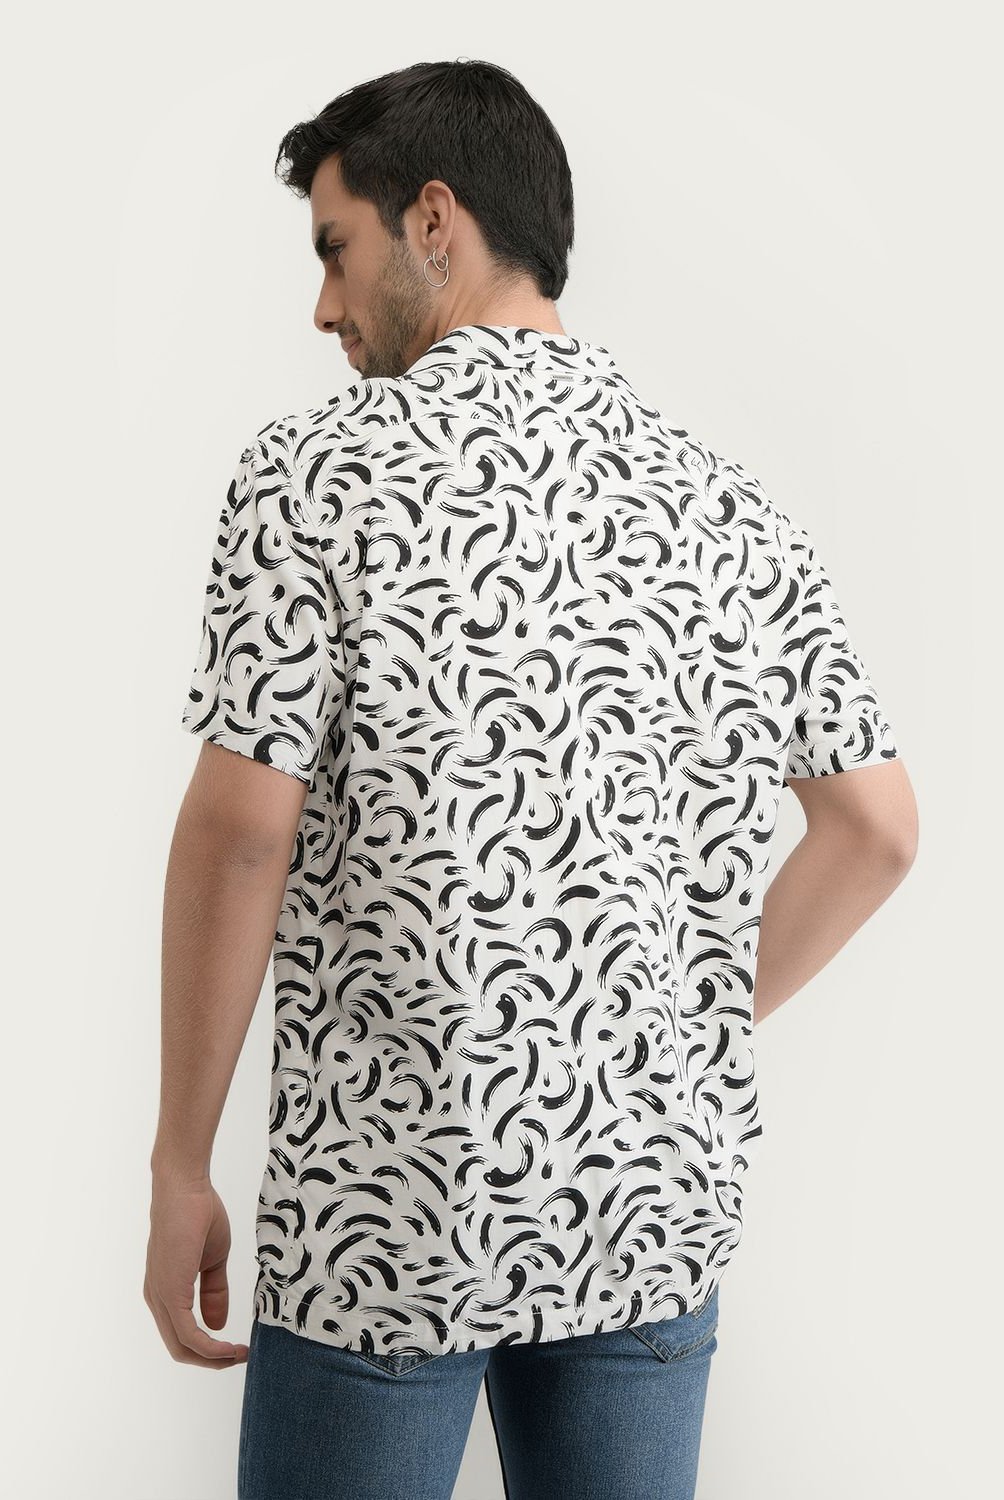 DENIMLAB - Camisa casual para Hombre Regular Denimlab